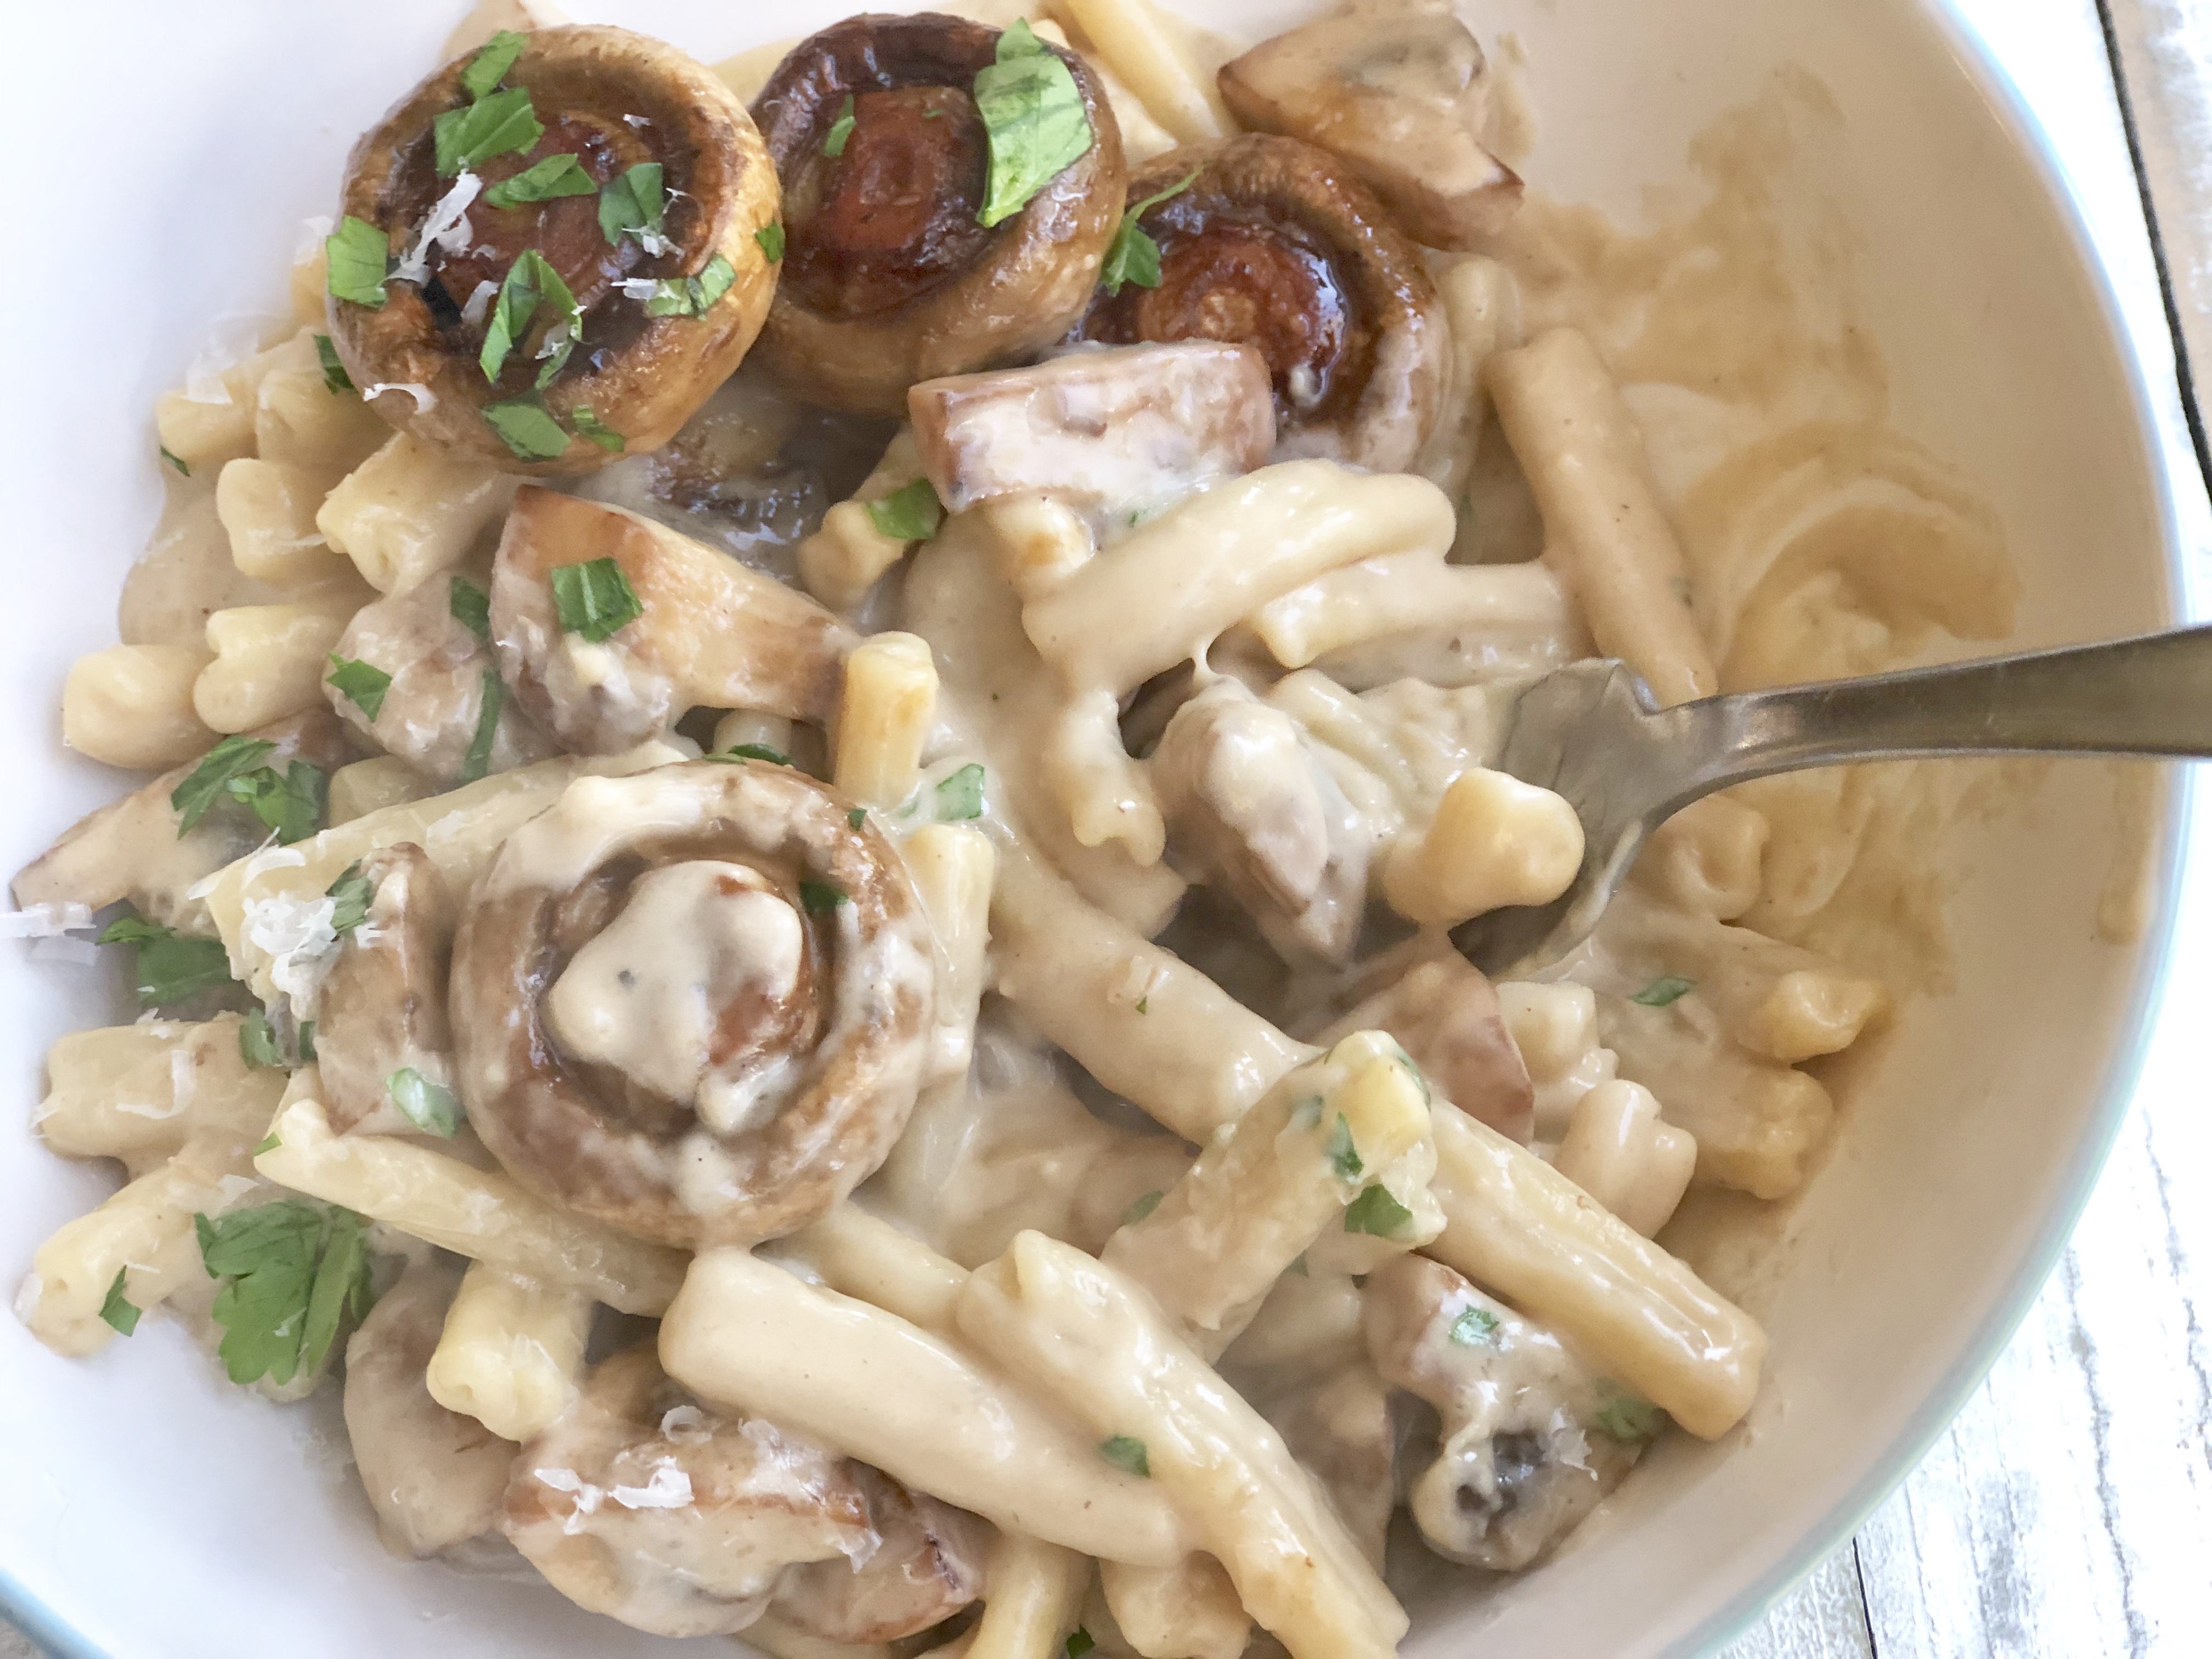 Creamy mushroom pasta